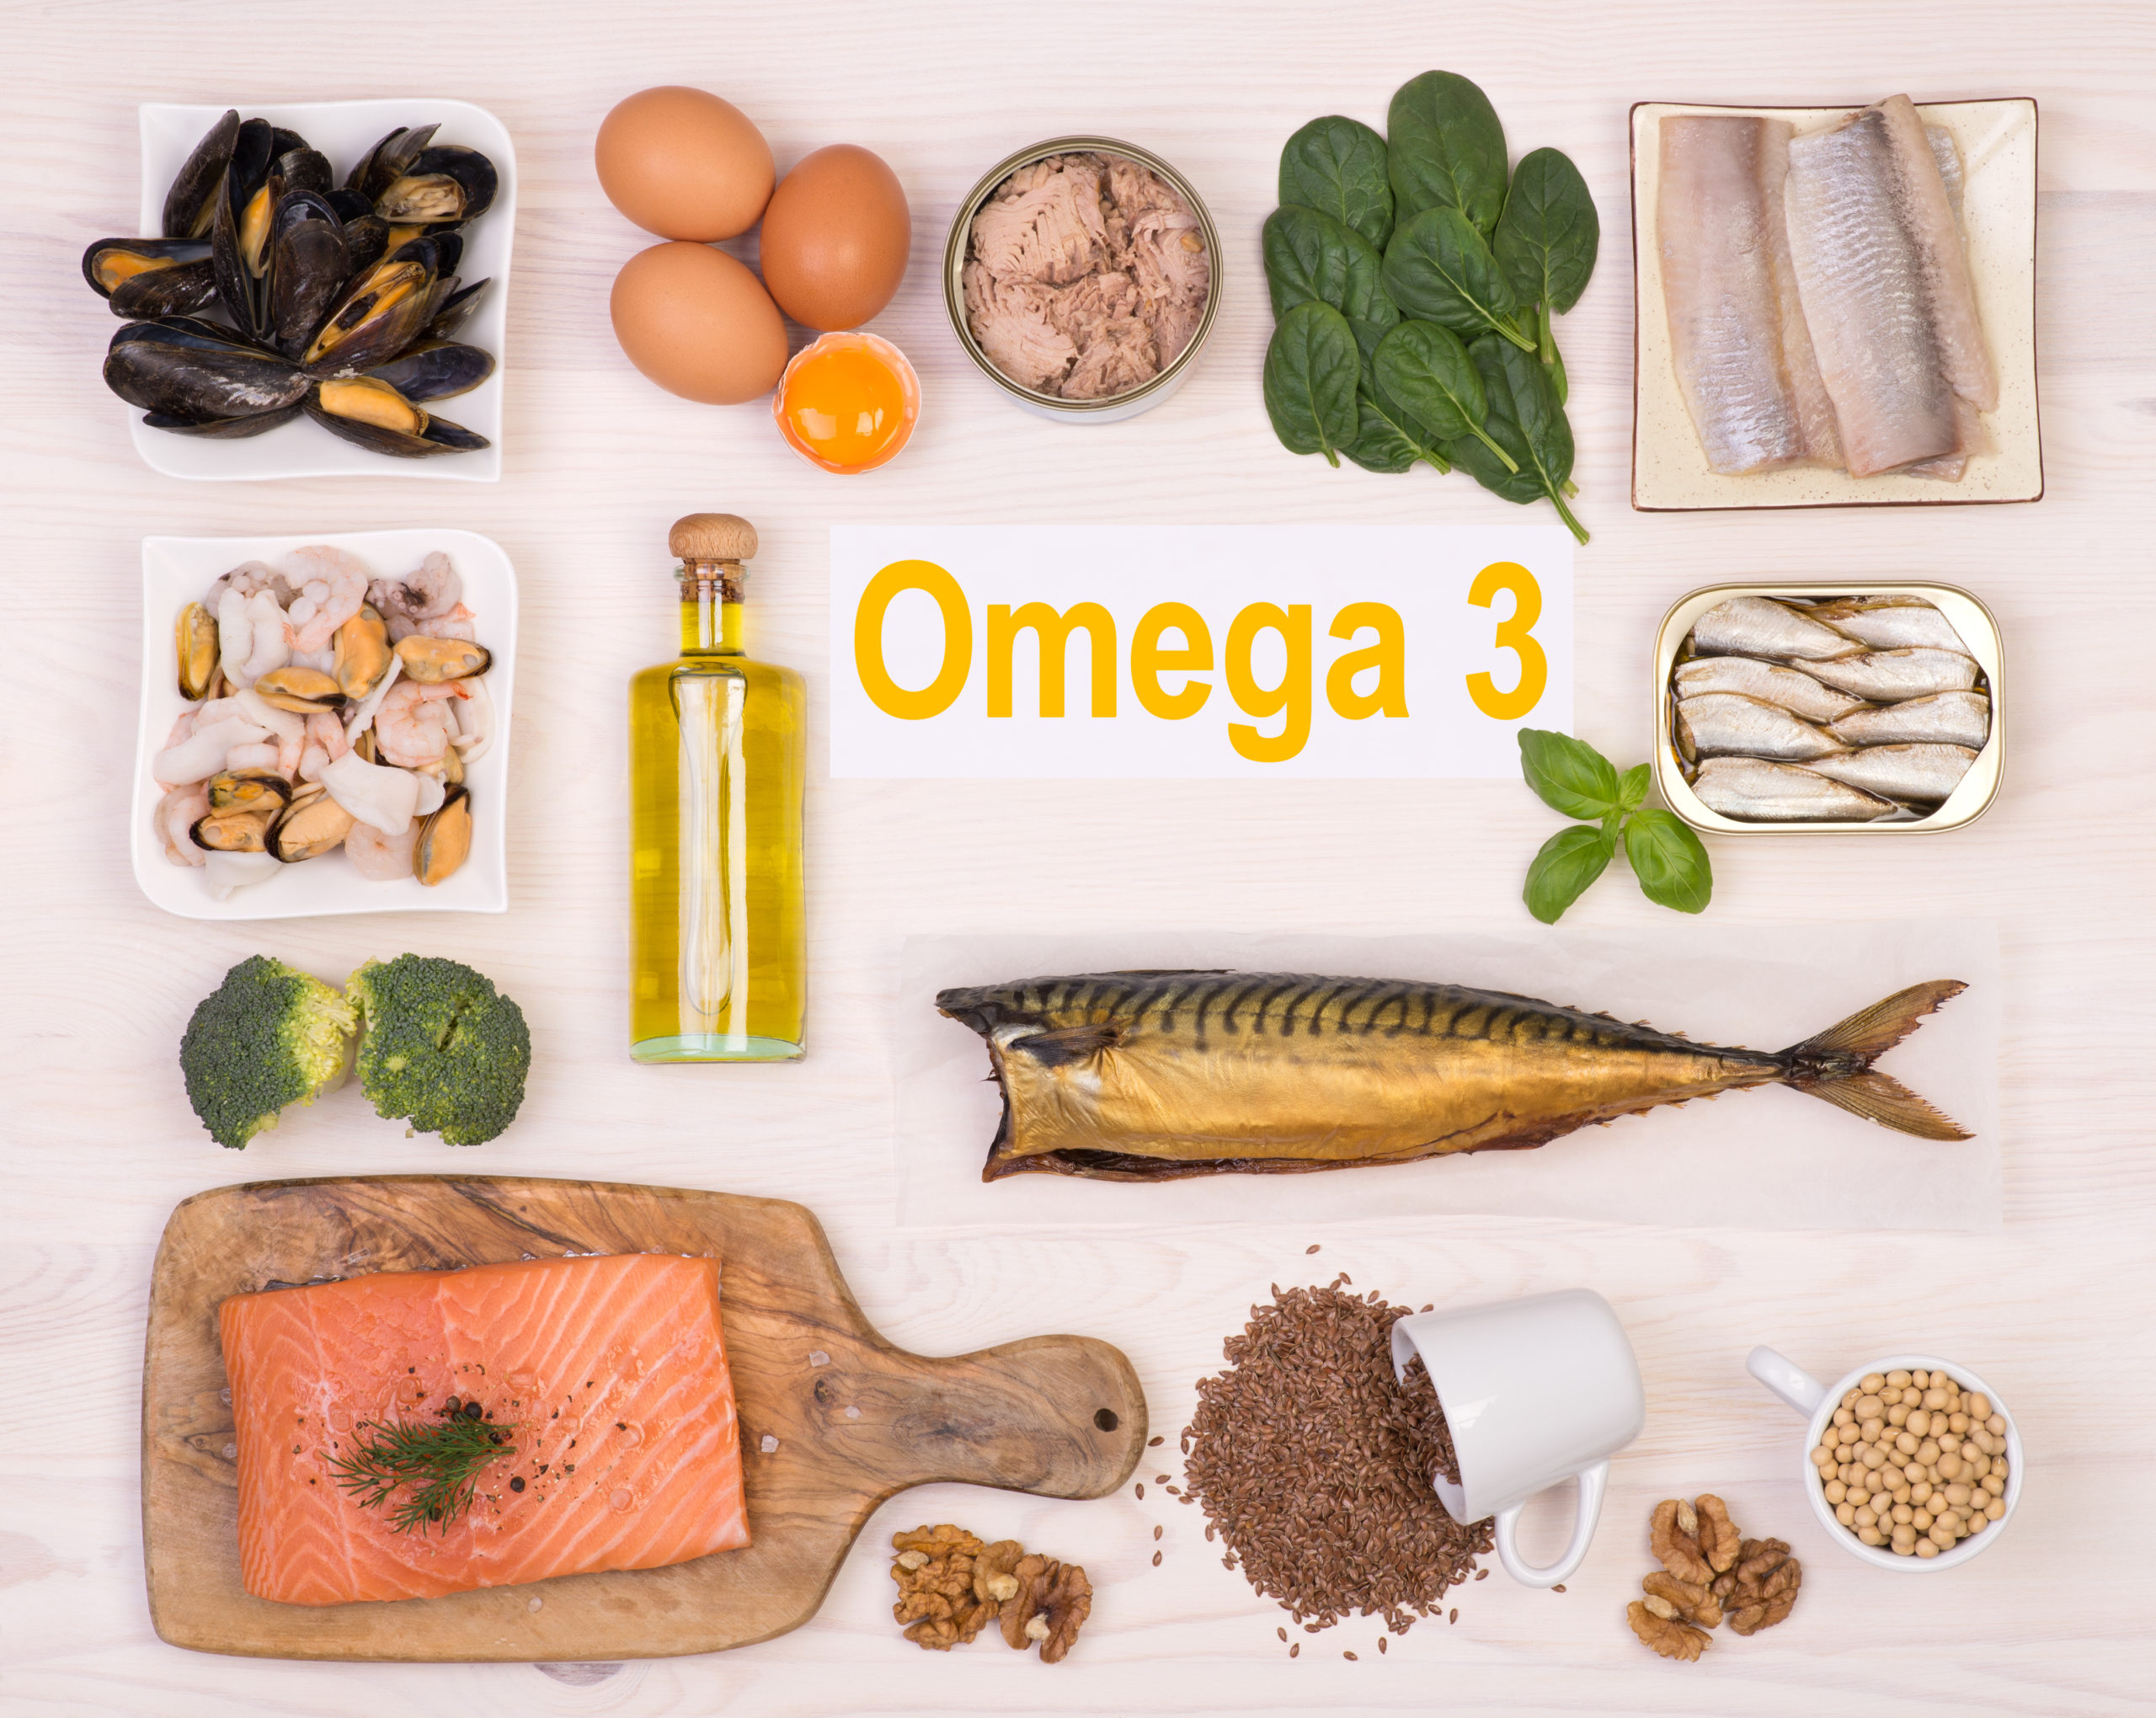 Omega 3 Foods including salmon sardines eggs dark leafy greens oily fish